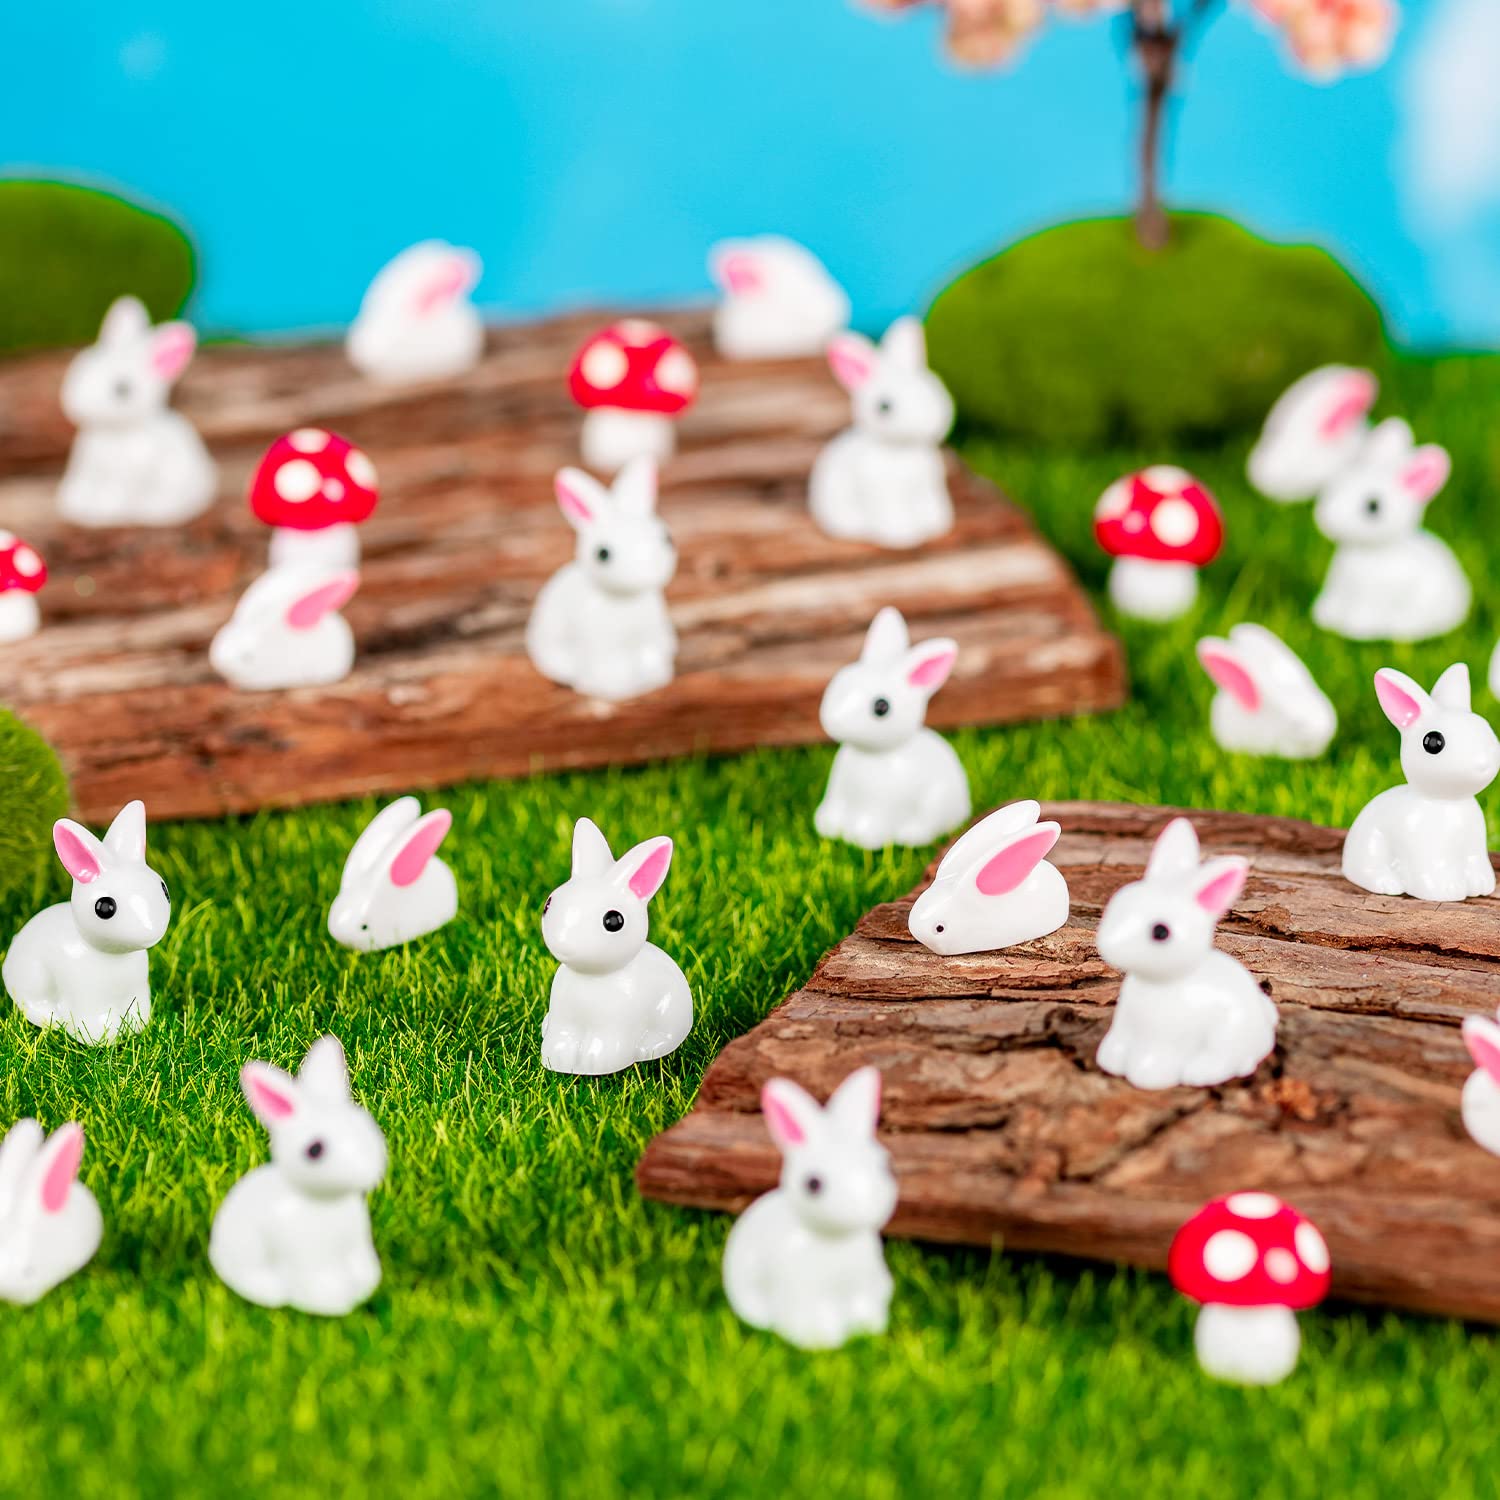 FFNIU Miniature Rabbit Figurines, 100Pcs Mini Resin Bunny Animals Toy, Miniature Rabbit for Landscape Ornaments Miniature Garden Decor Potted Plant,Cake Topper Decoration